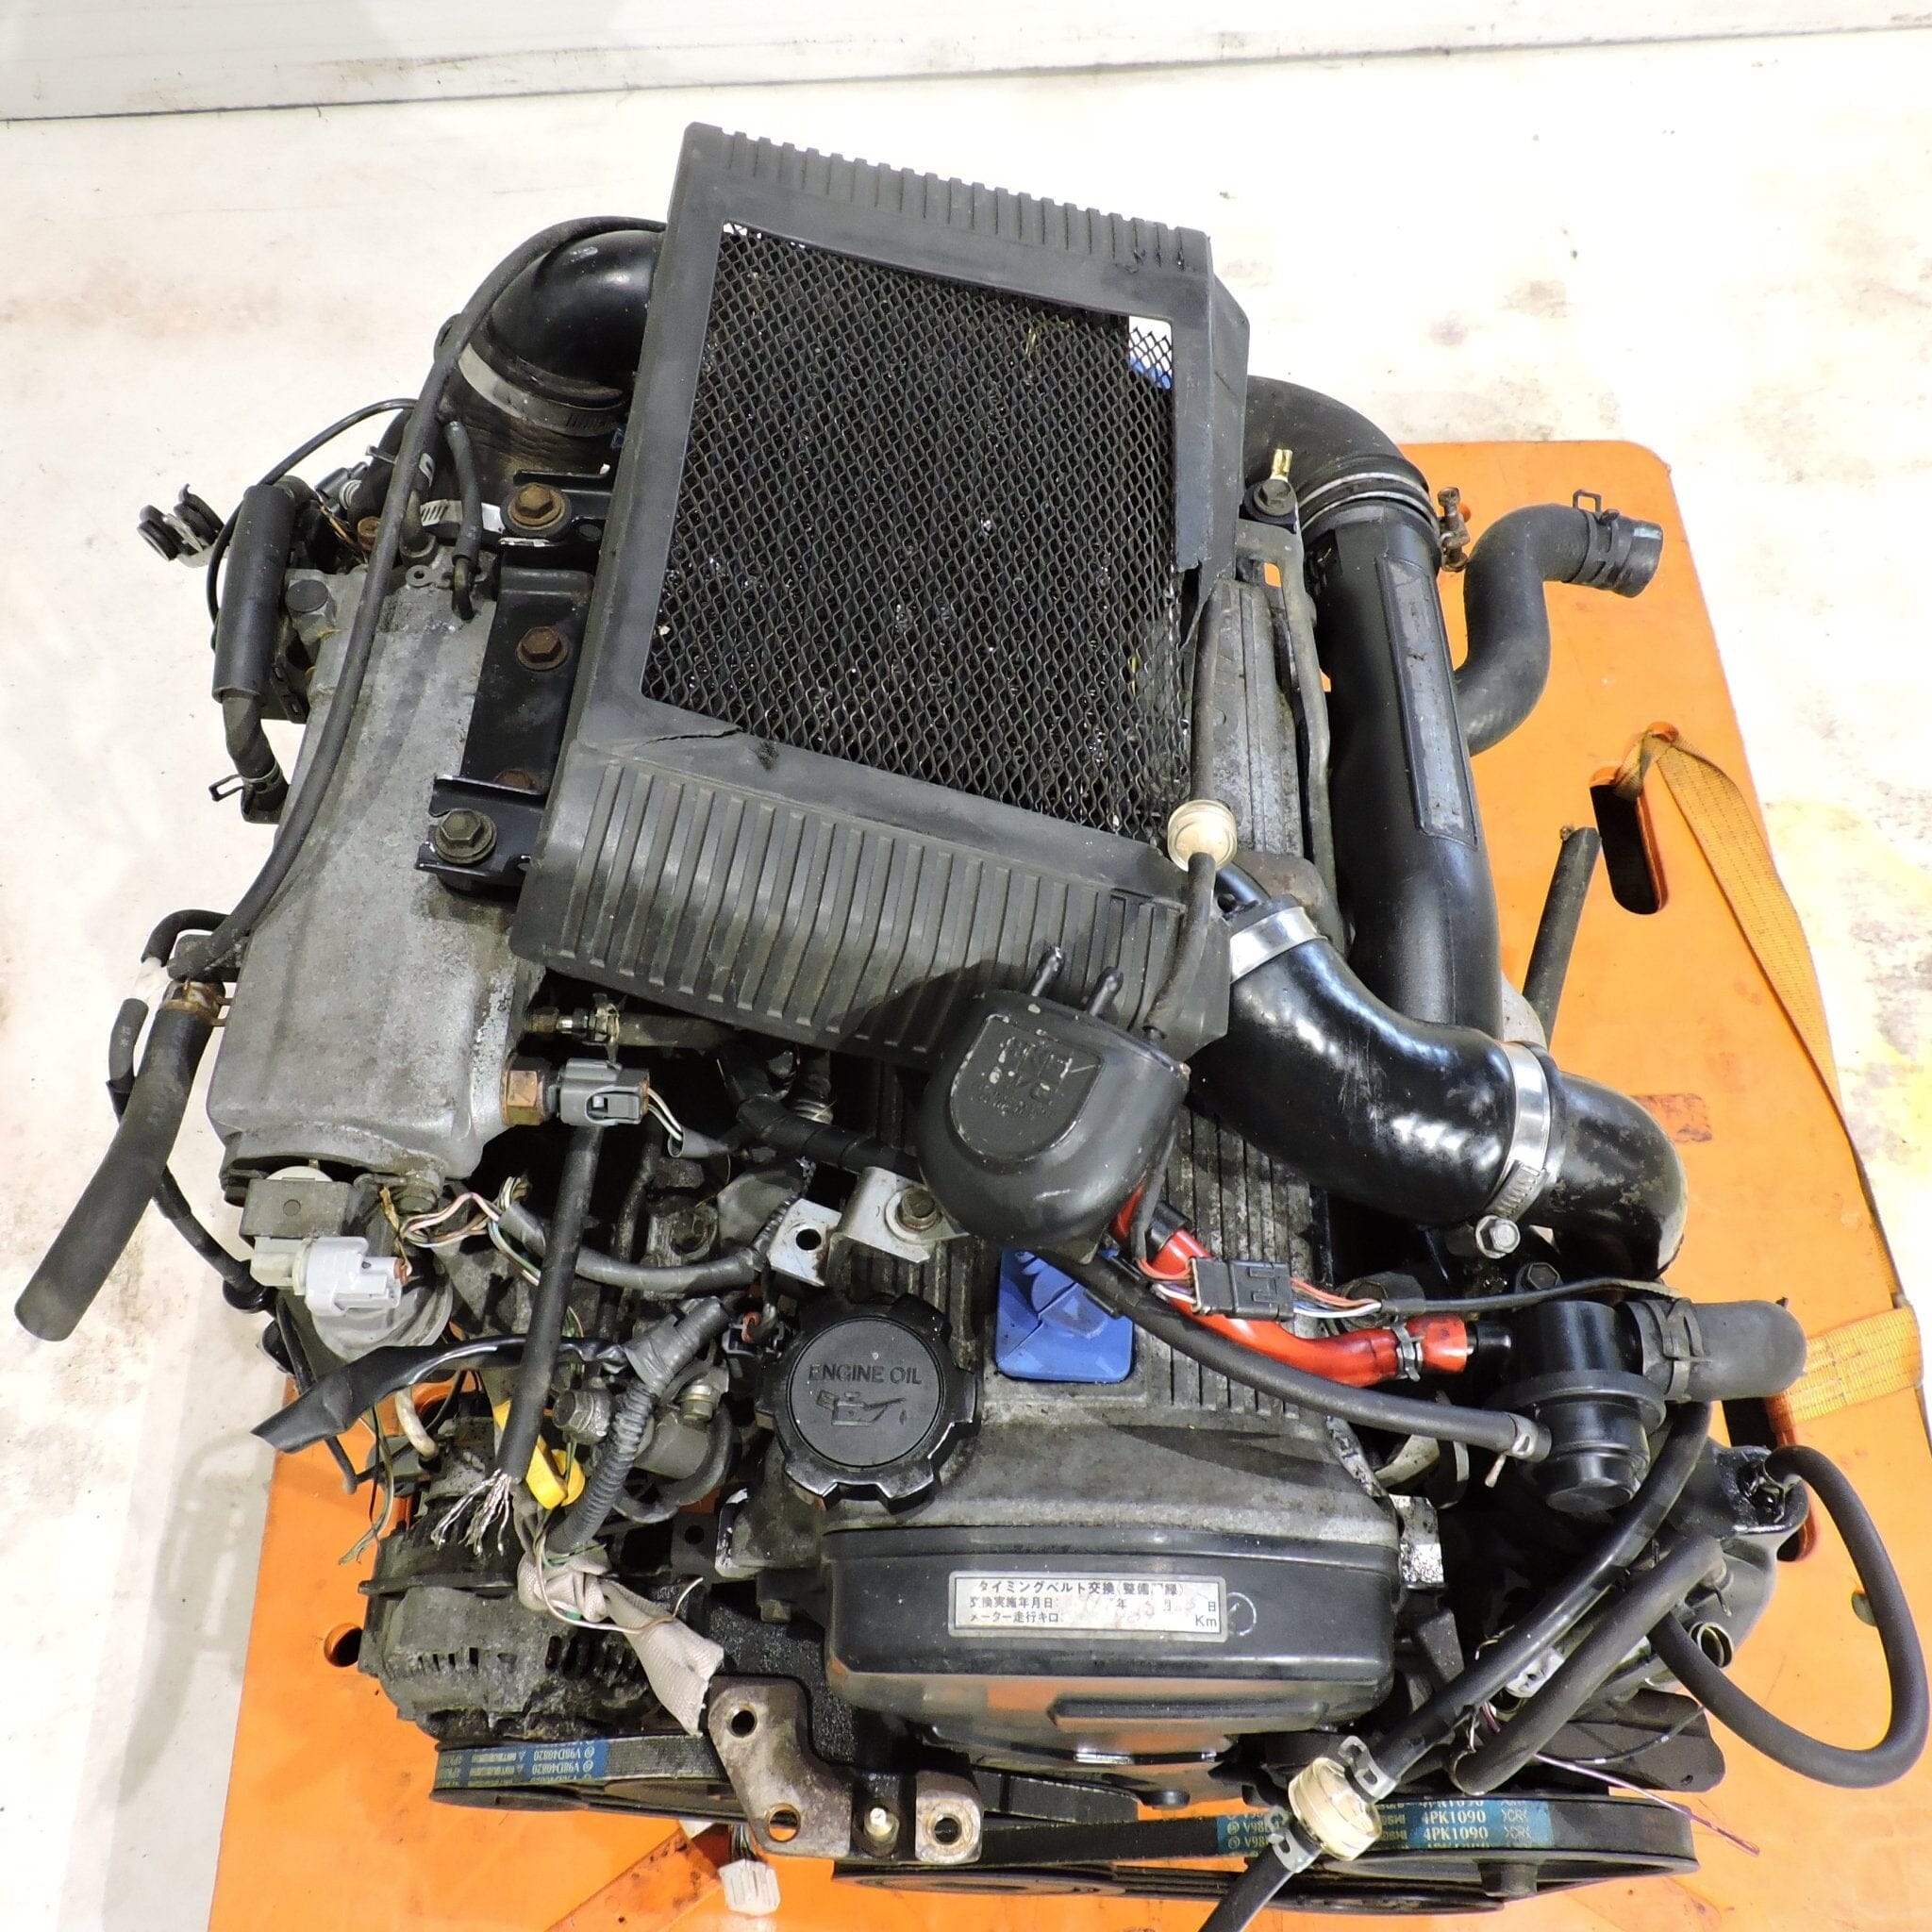 Toyota Starlet Gt 1989-1999 1.3L Turbo Full Manual Jdm Engine Transmission Swap - 4e-Fte